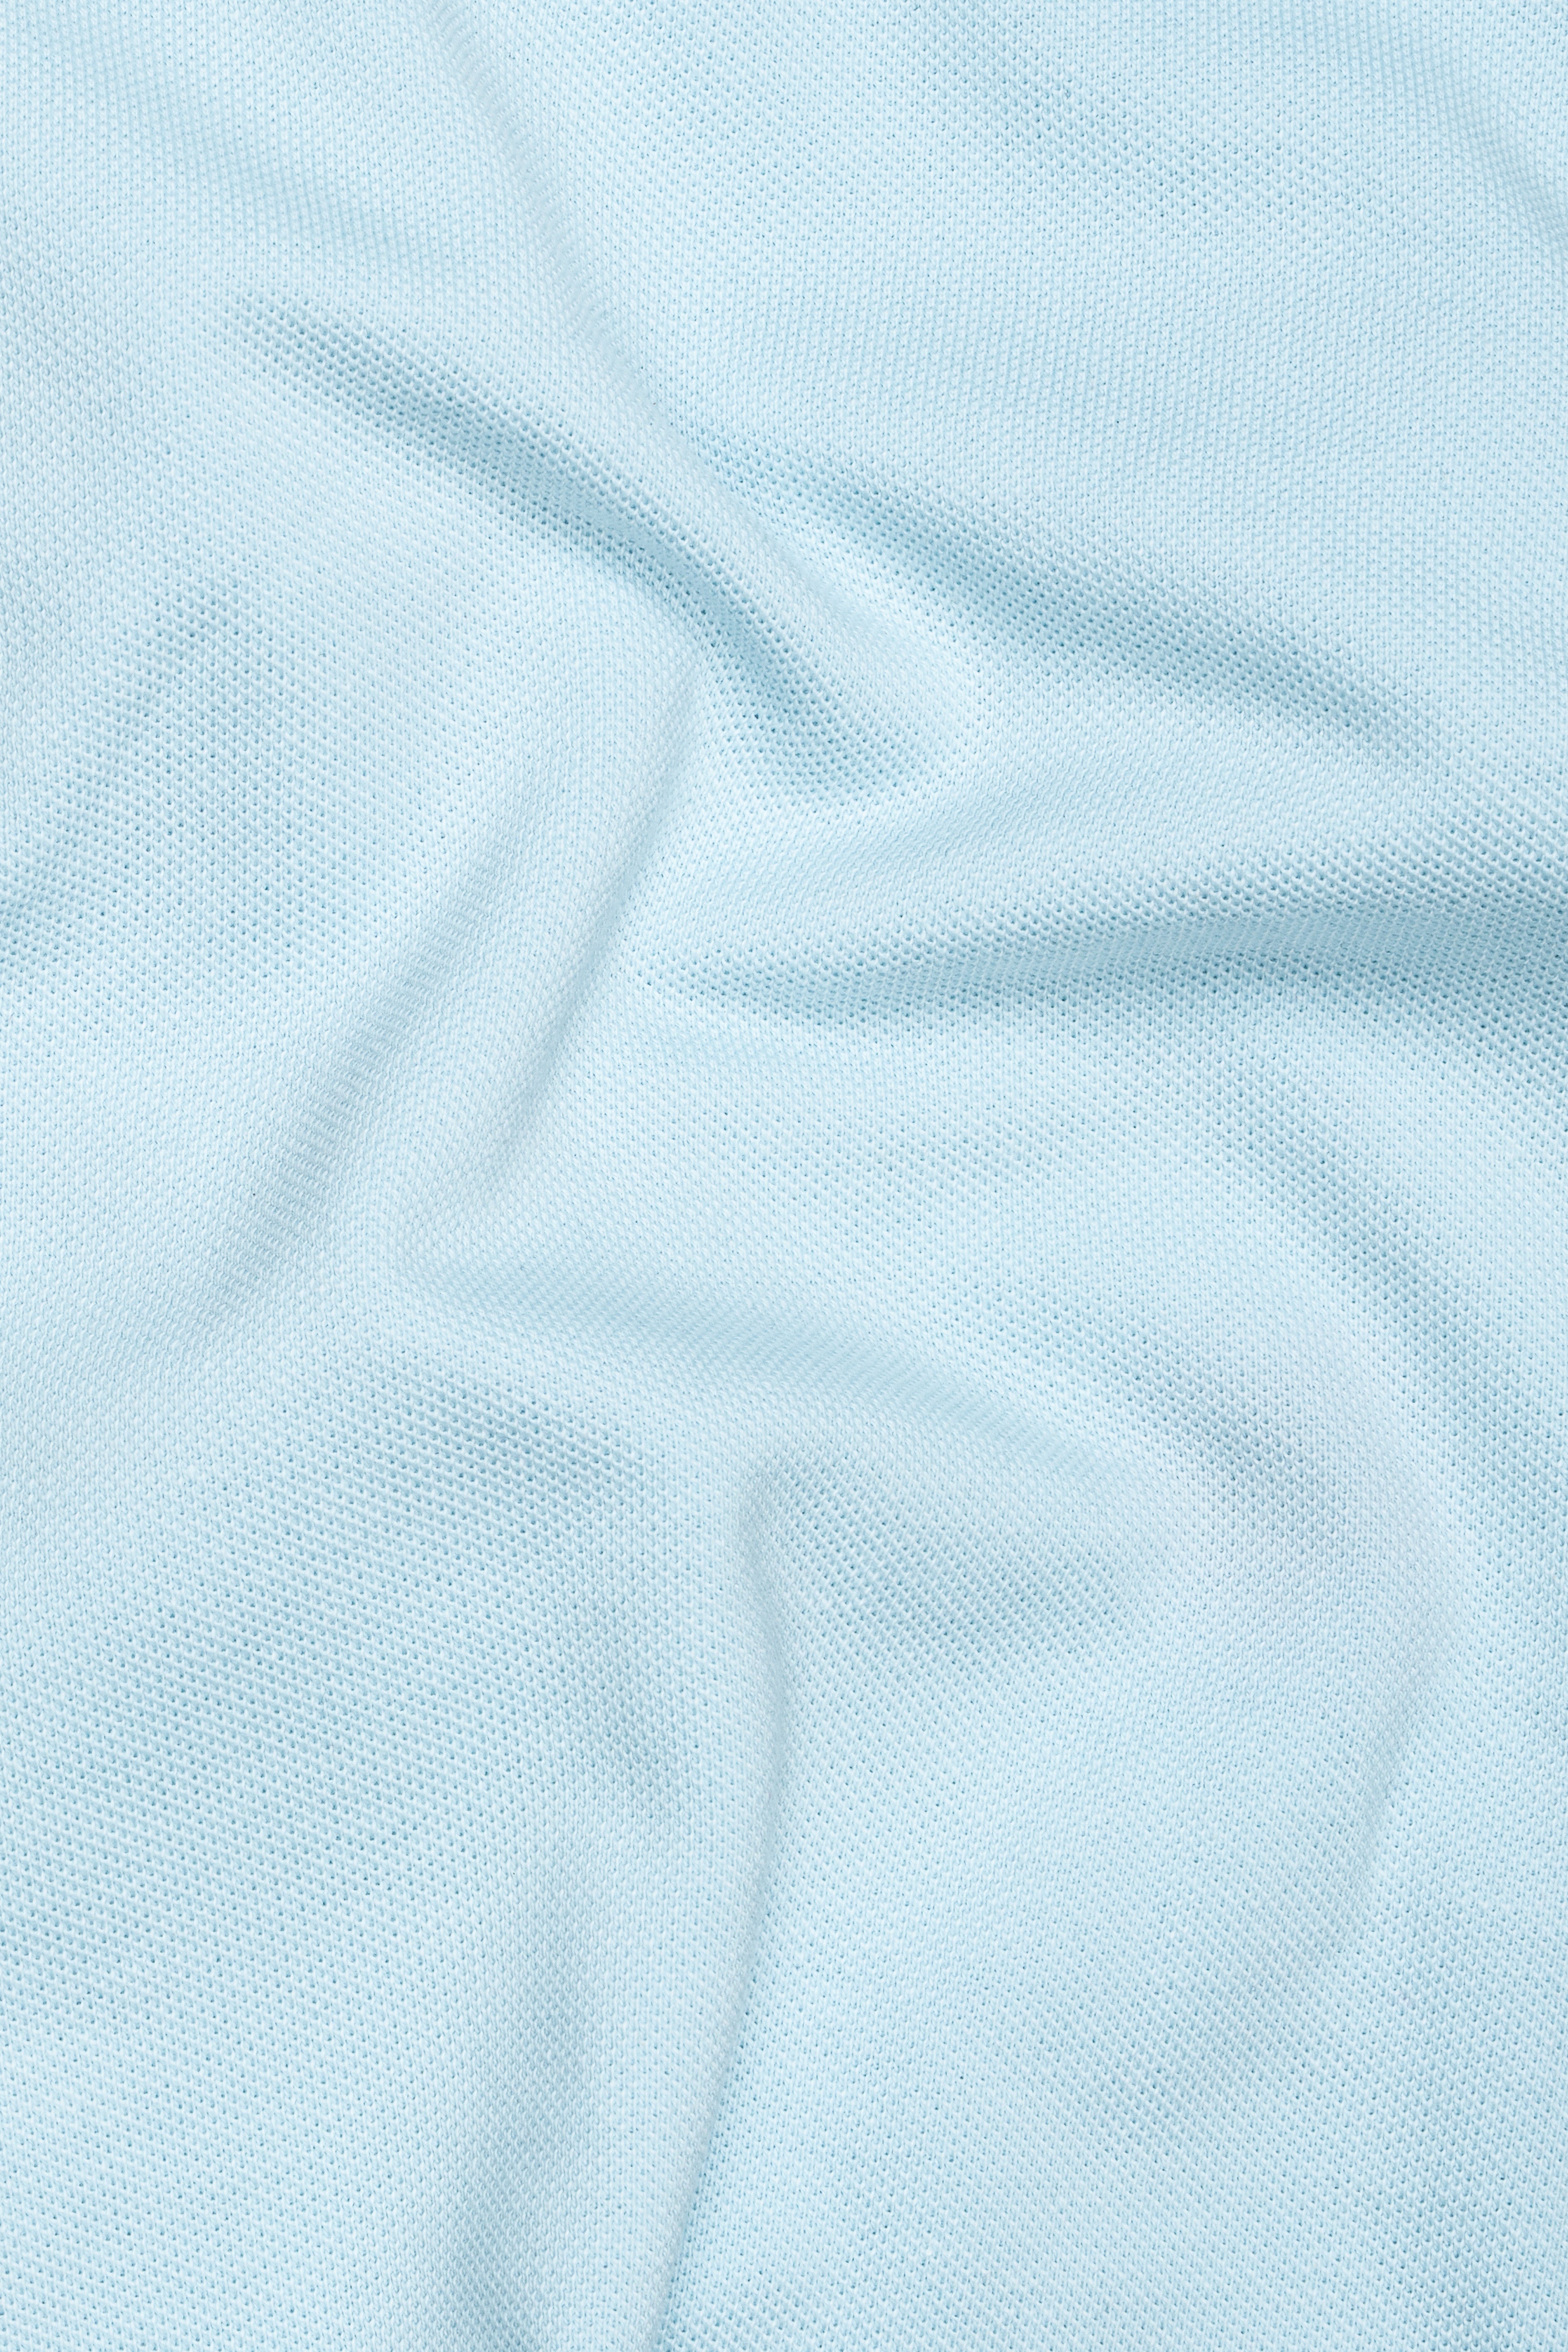 Ziggurat Blue Striped Premium Cotton Pique T-Shirt TS908-S, TS908-M, TS908-L, TS908-XL, TS908-XXL